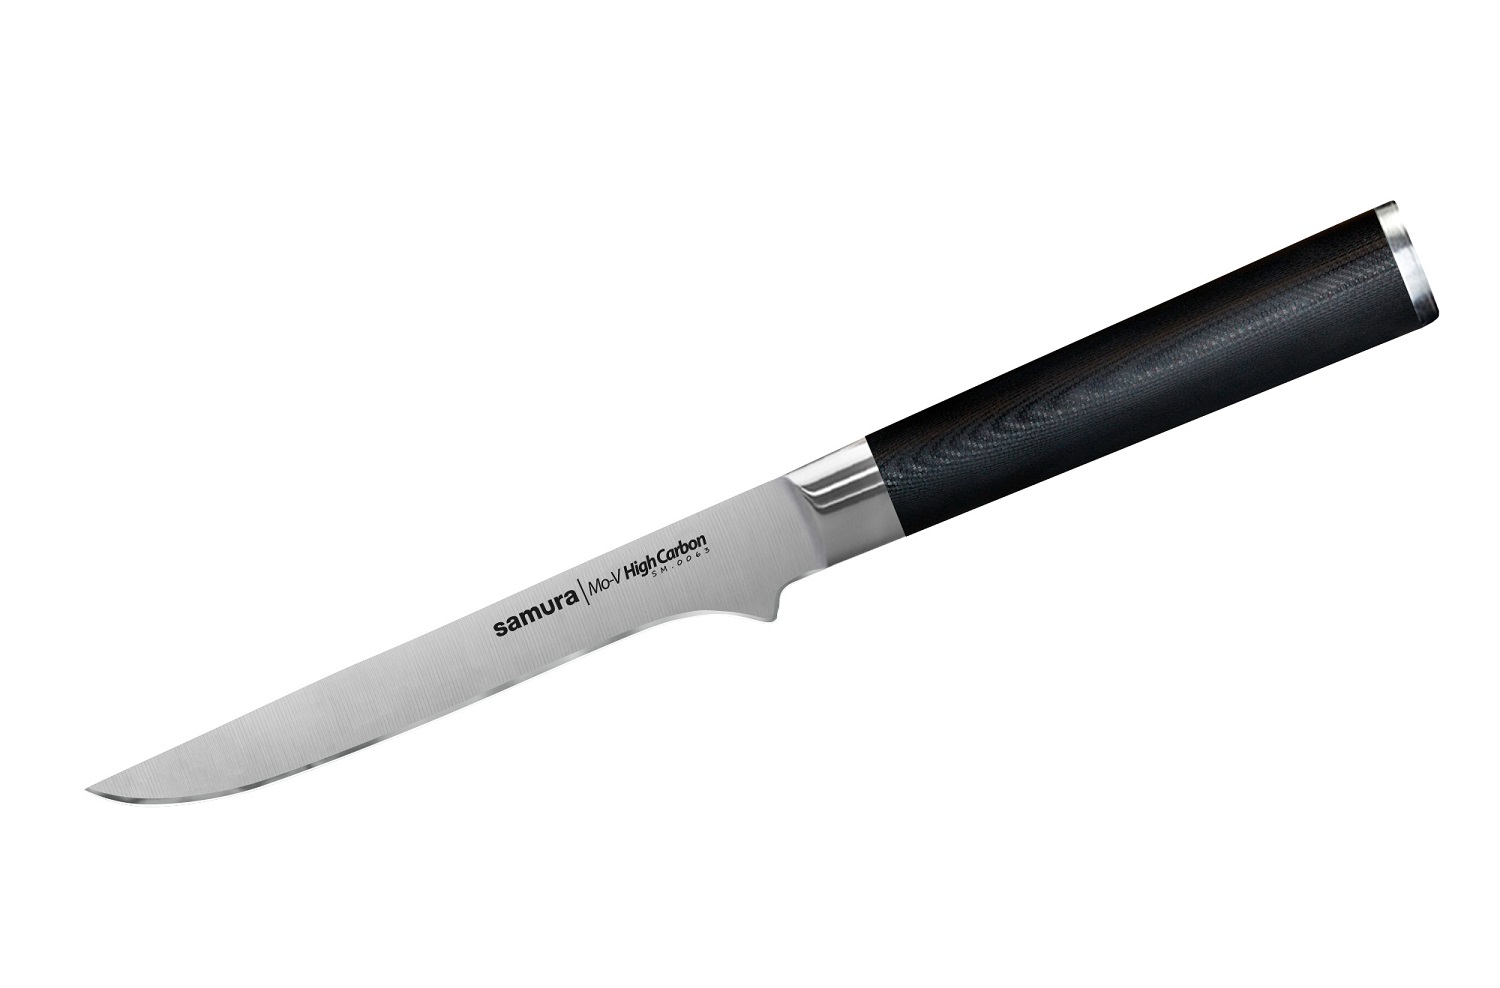 Нож Samura обвалочный Mo-V, 16,5 см, G-10 нож поварской mo v 20 см sm 0085 k samura